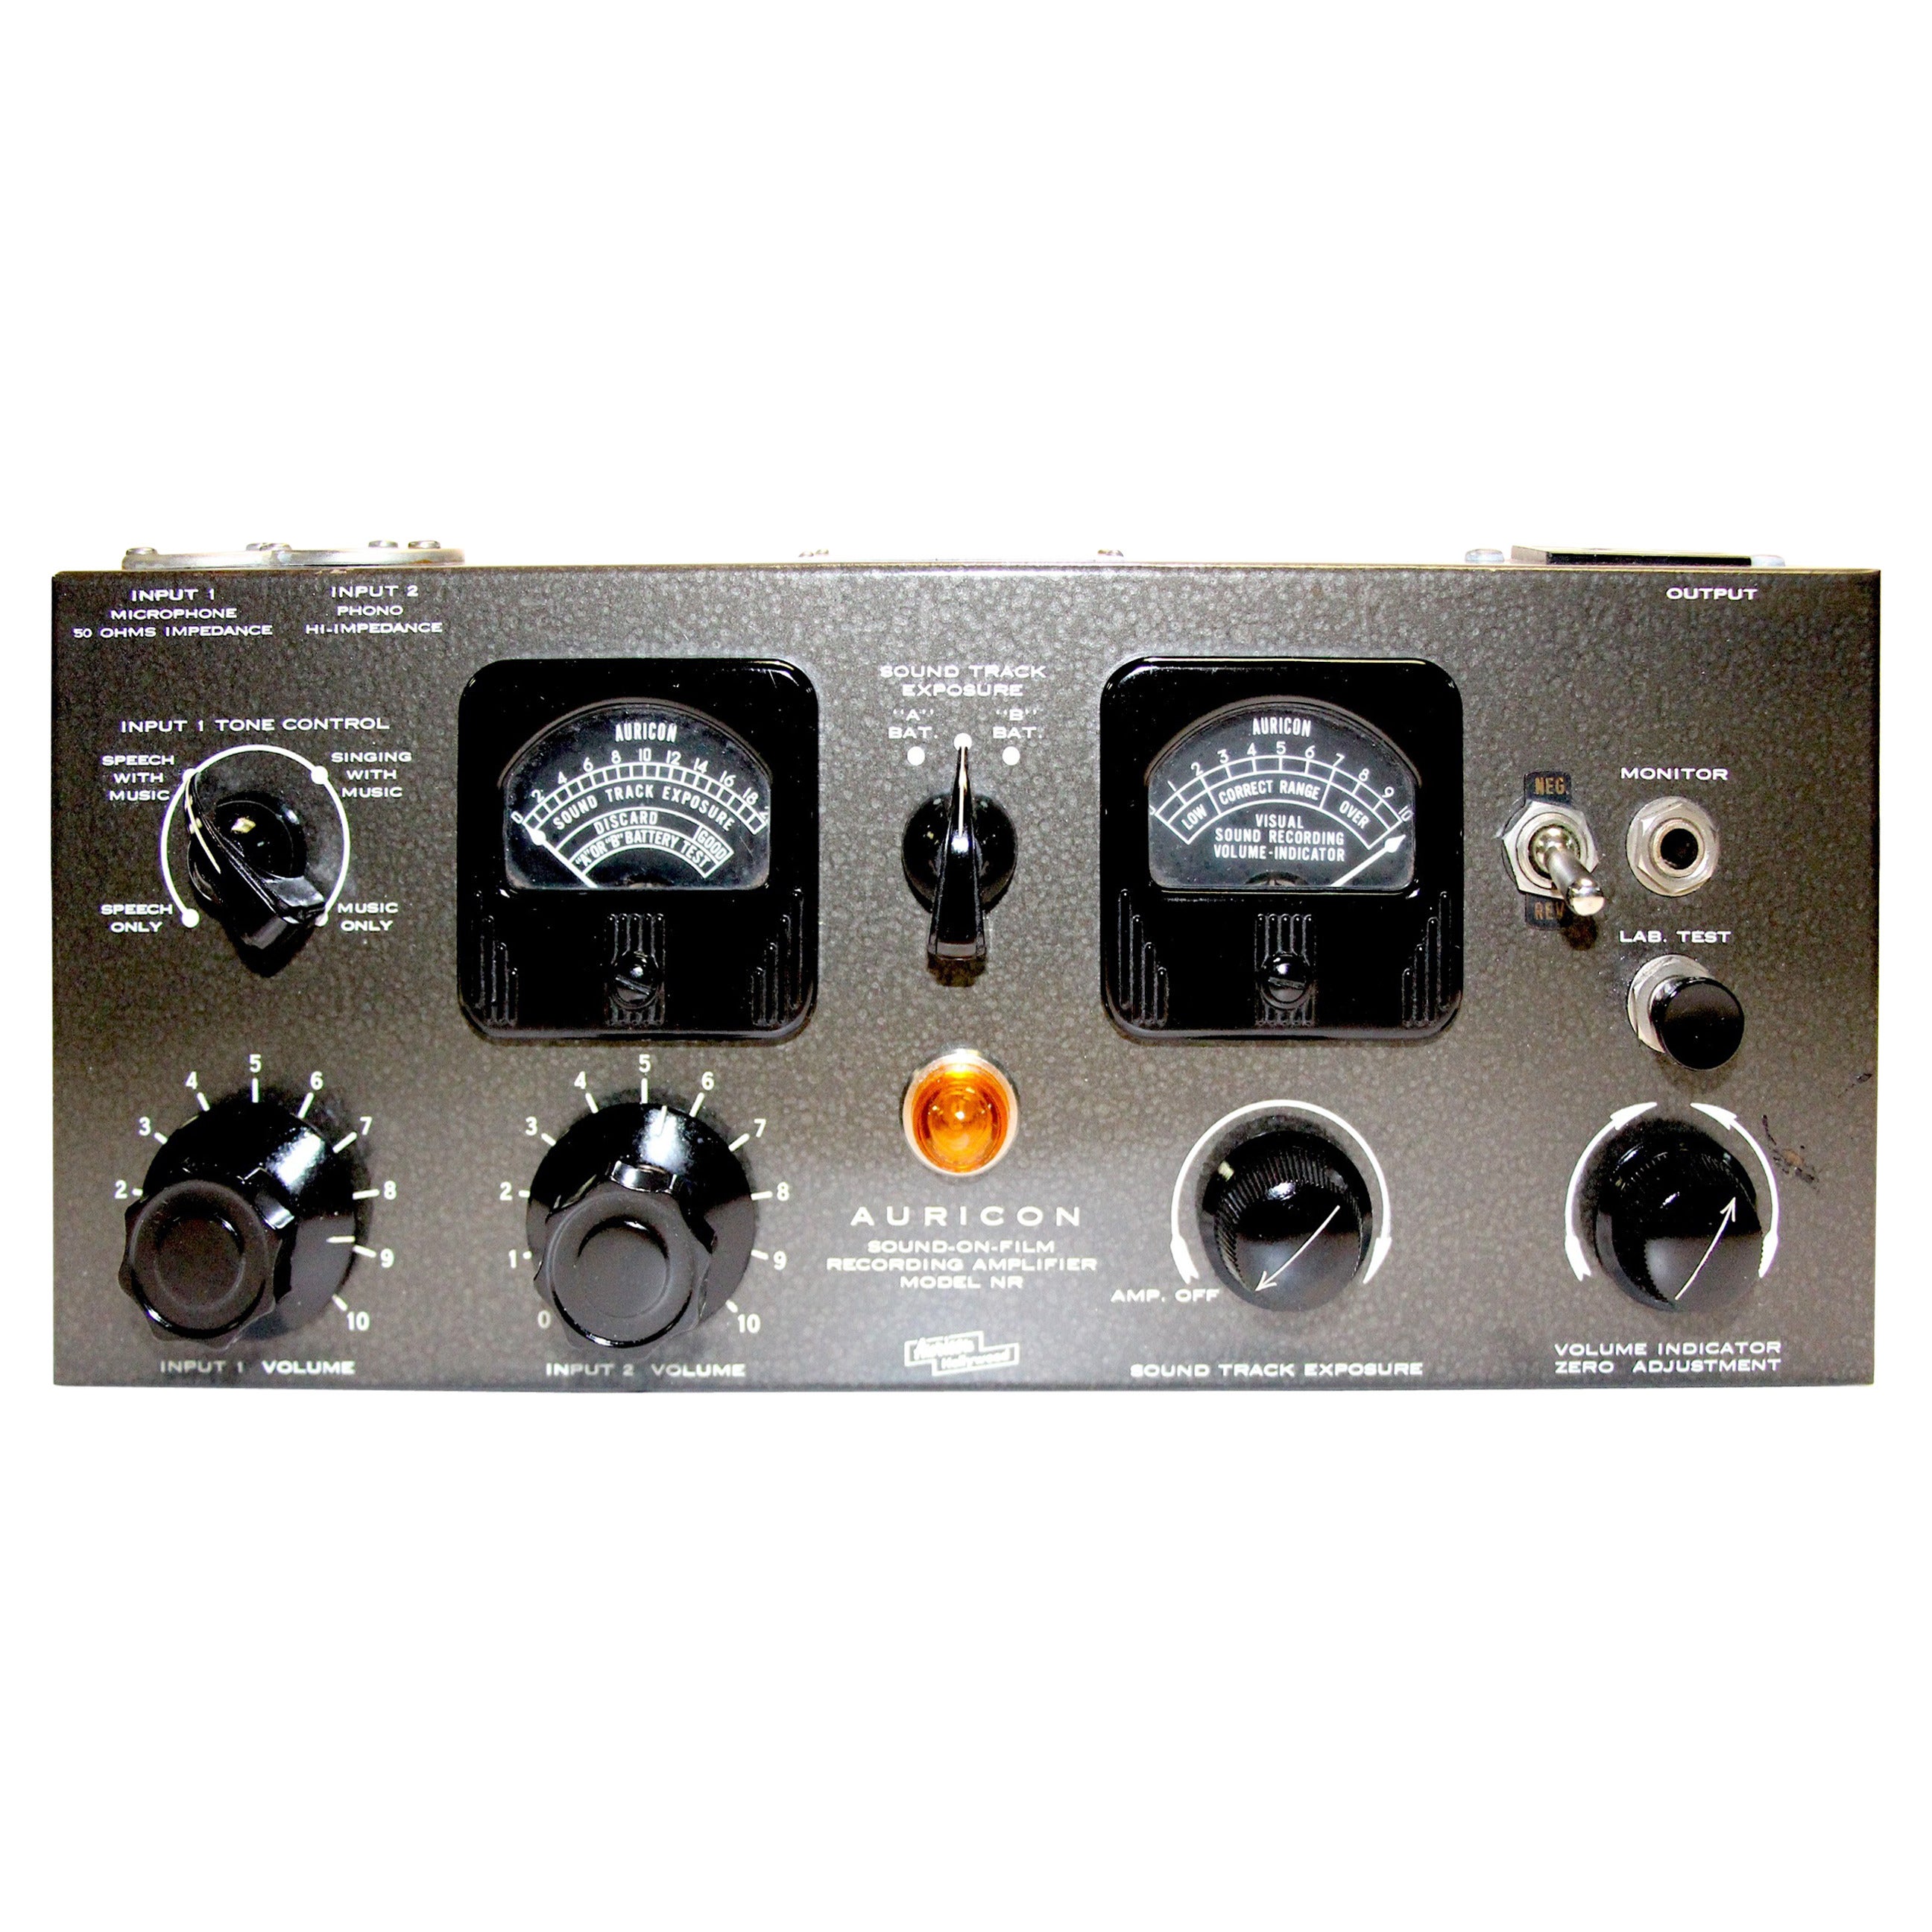 Auricon Sound on Film Optical Sound Recording Cinema Amplifier NR-24, Circa 1949 For Sale